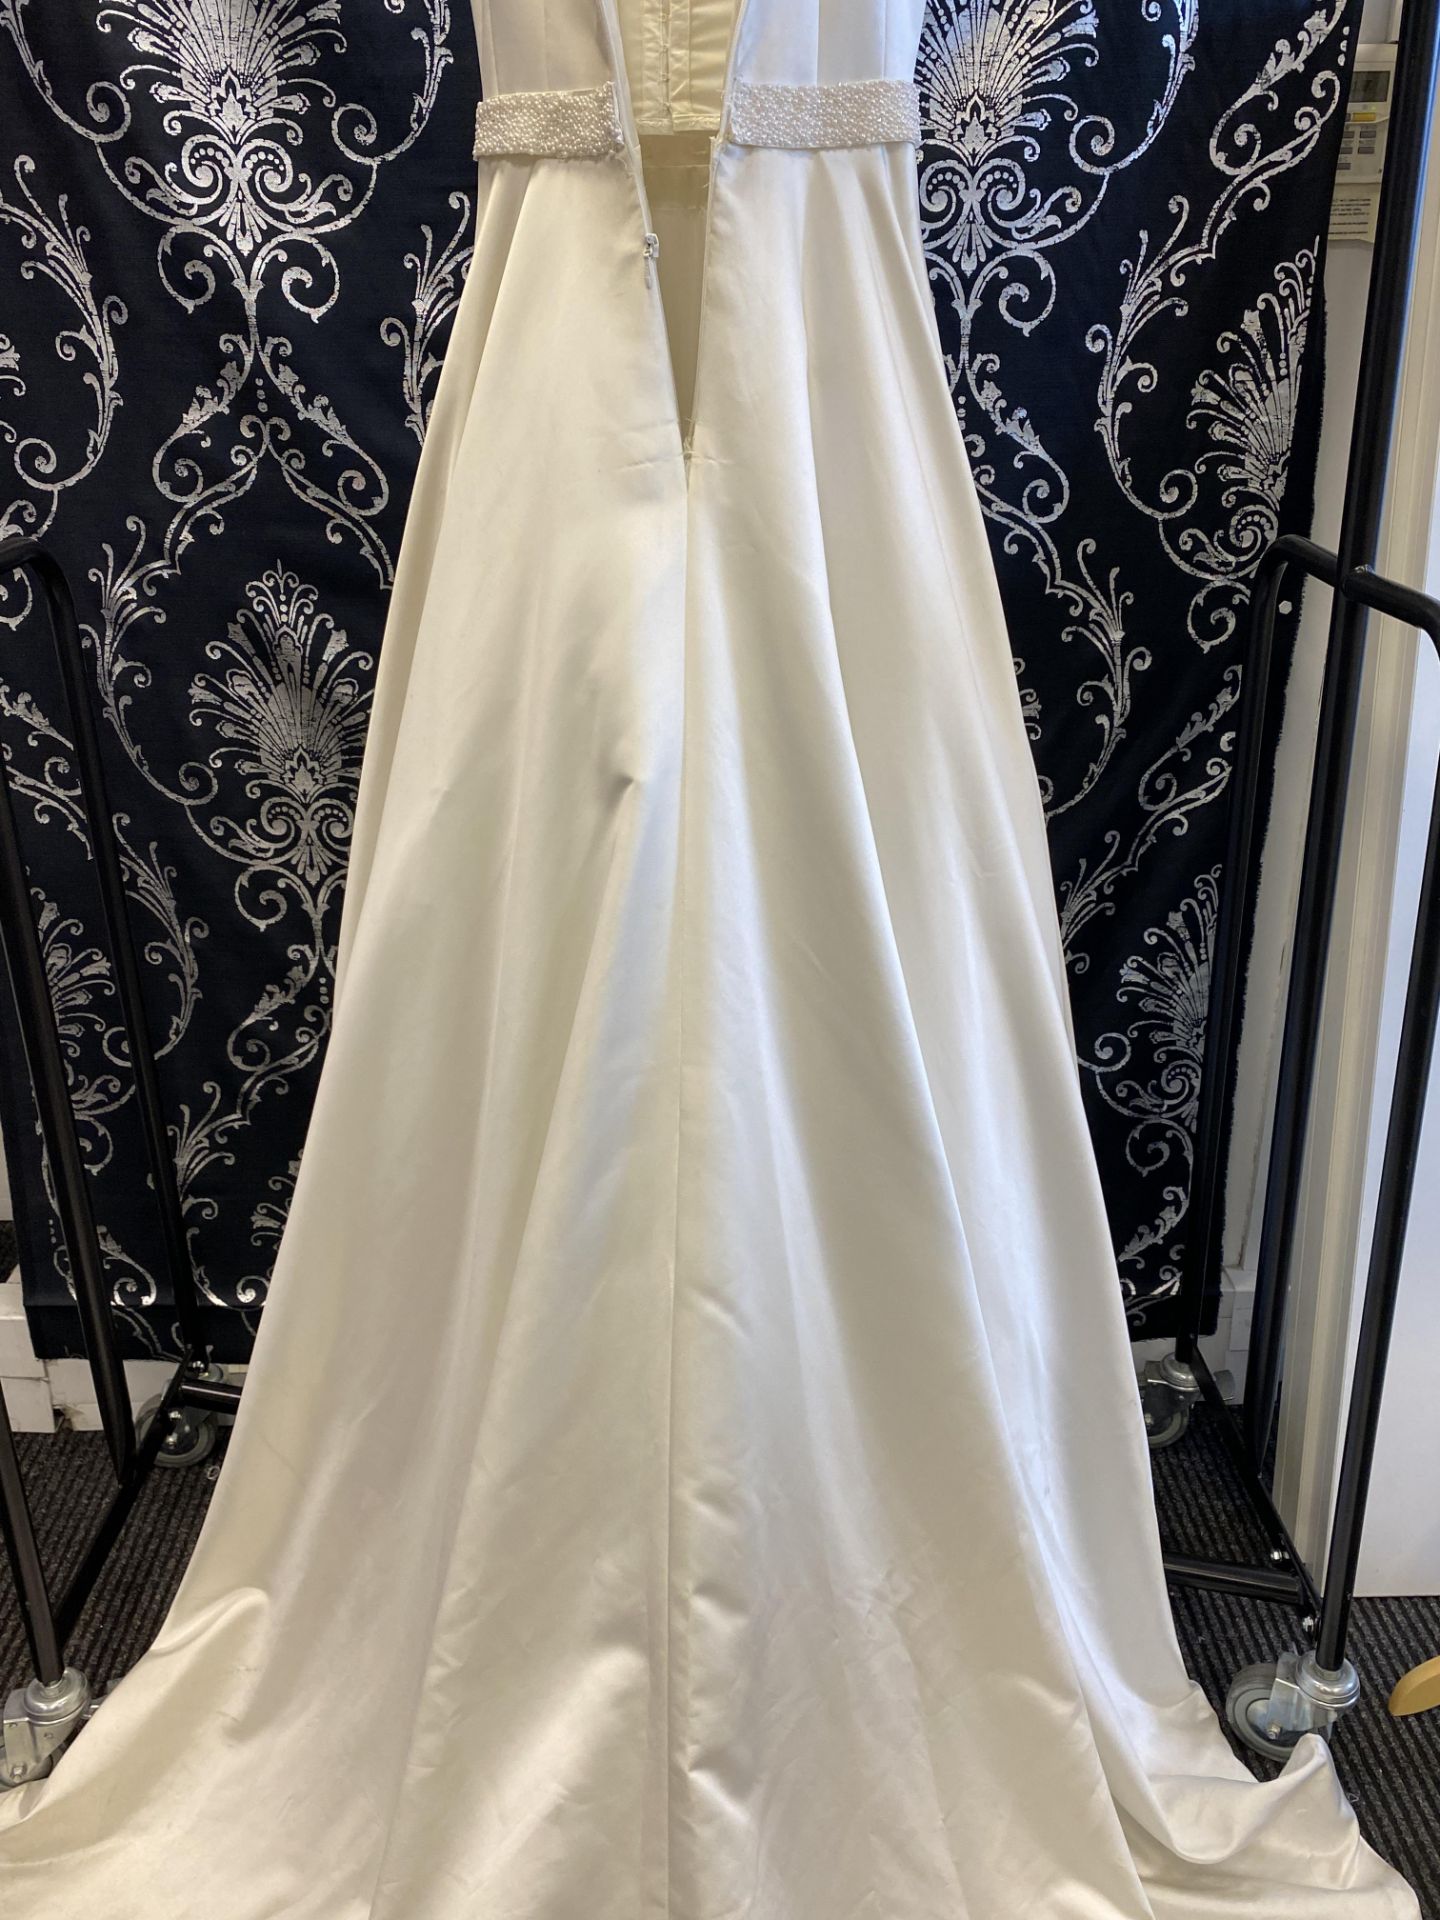 1 x MIA MIA 'Estelle' Timeless Satin Empire Line Designer Wedding Dress Bridal Gown RRP£1,000 UK12 - Image 3 of 8